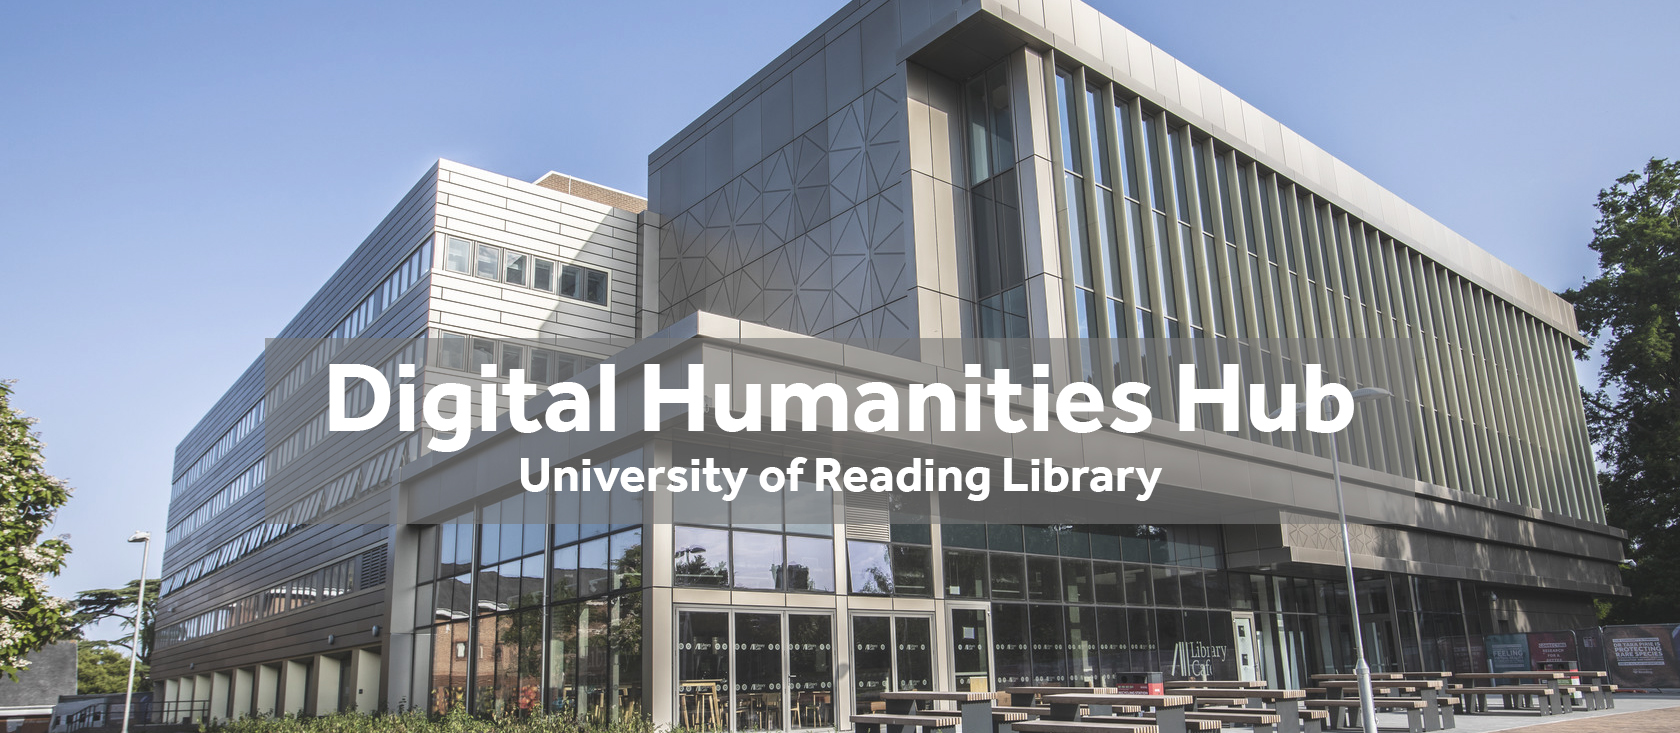 Digital Humanities Hub, University of Reading Library